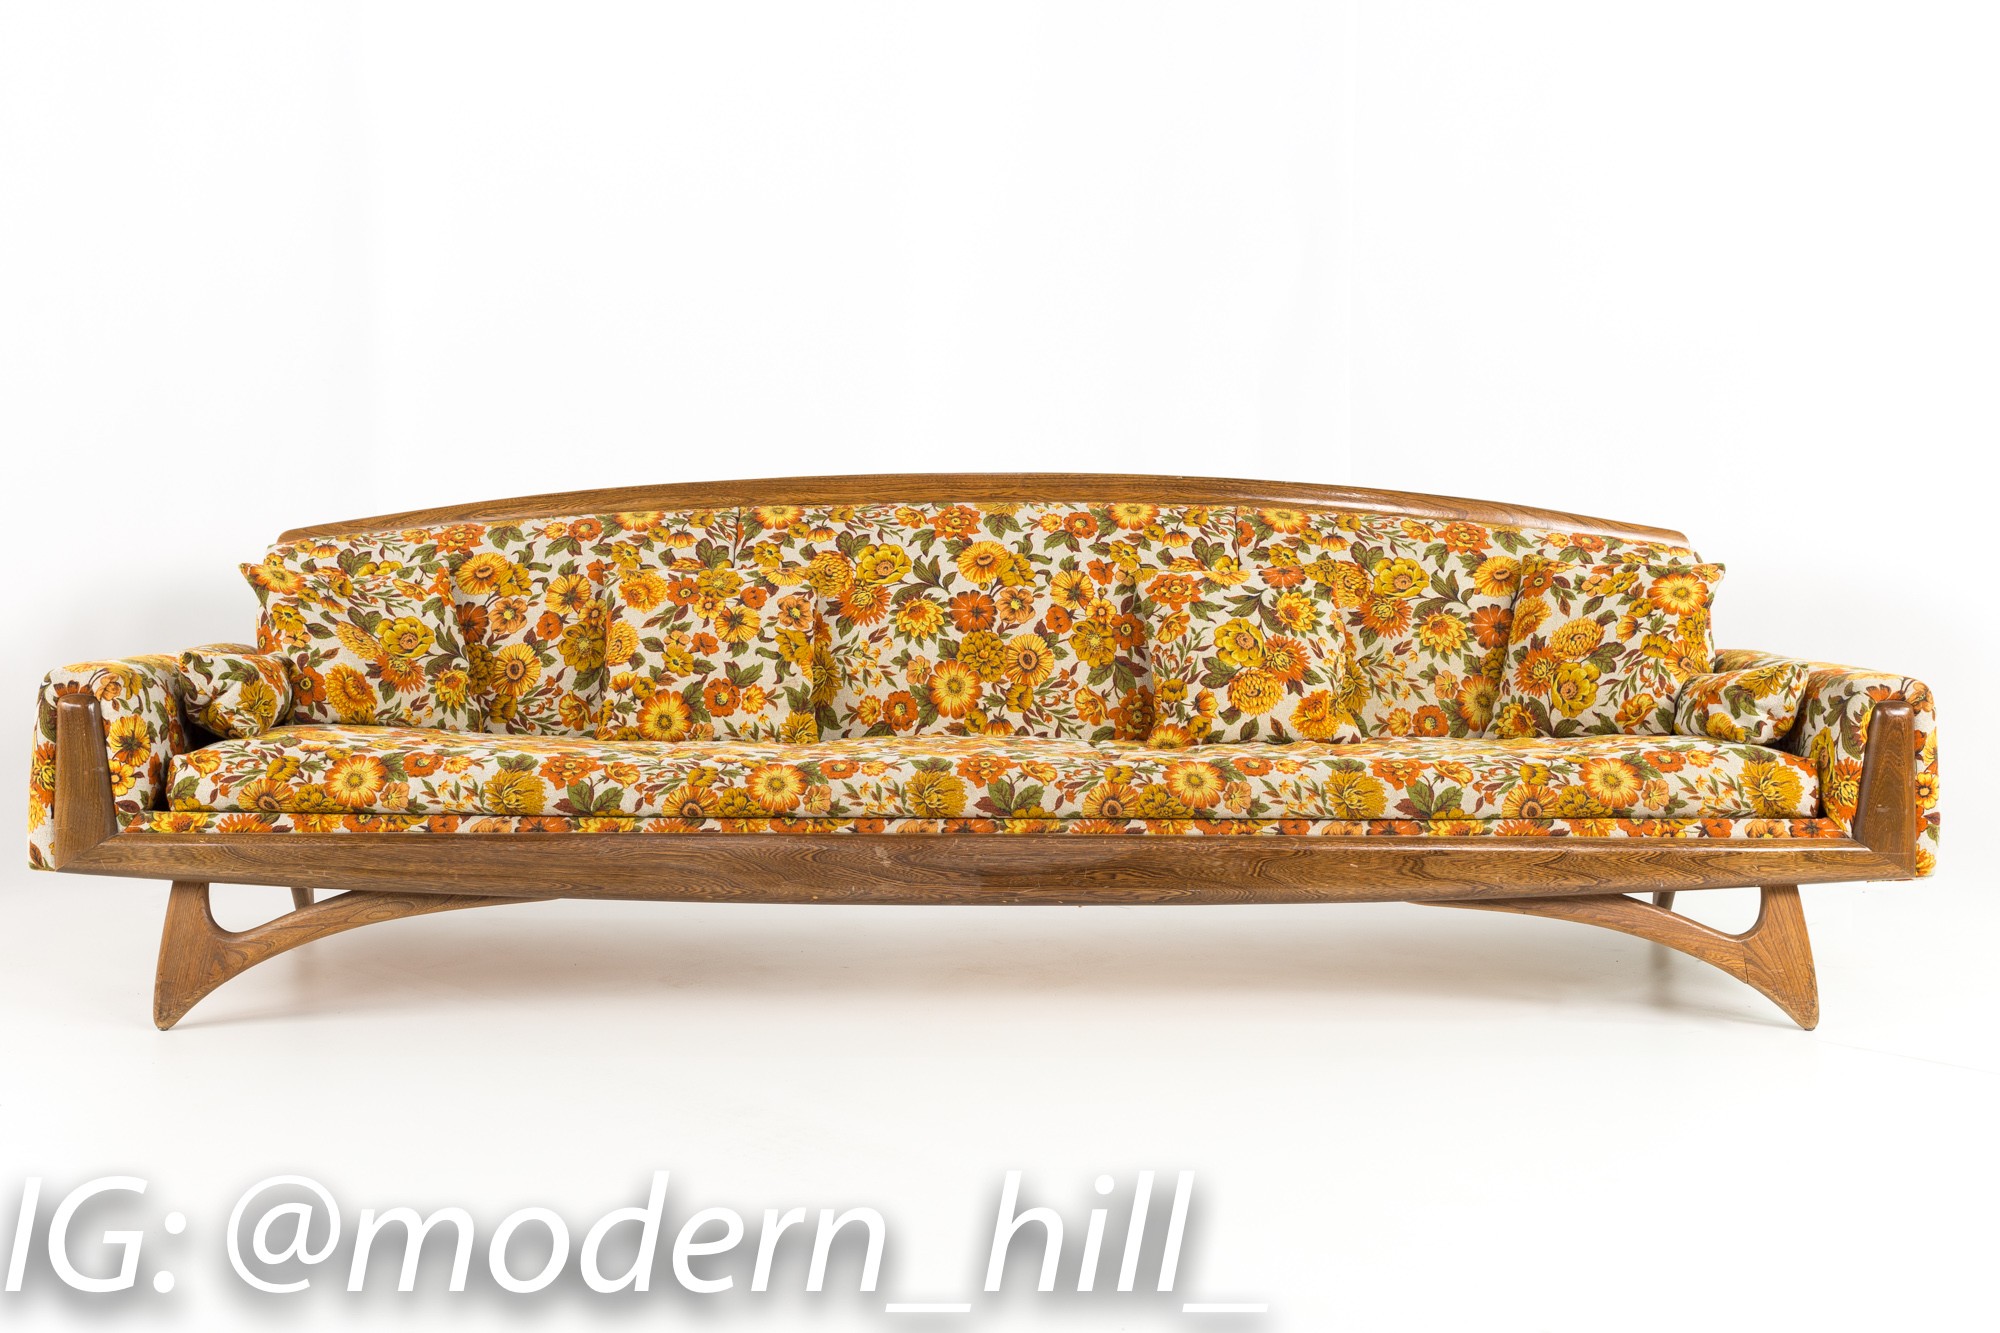 Kroehler Adrian Pearsall Style Mid Century Modern Gondola Sofa